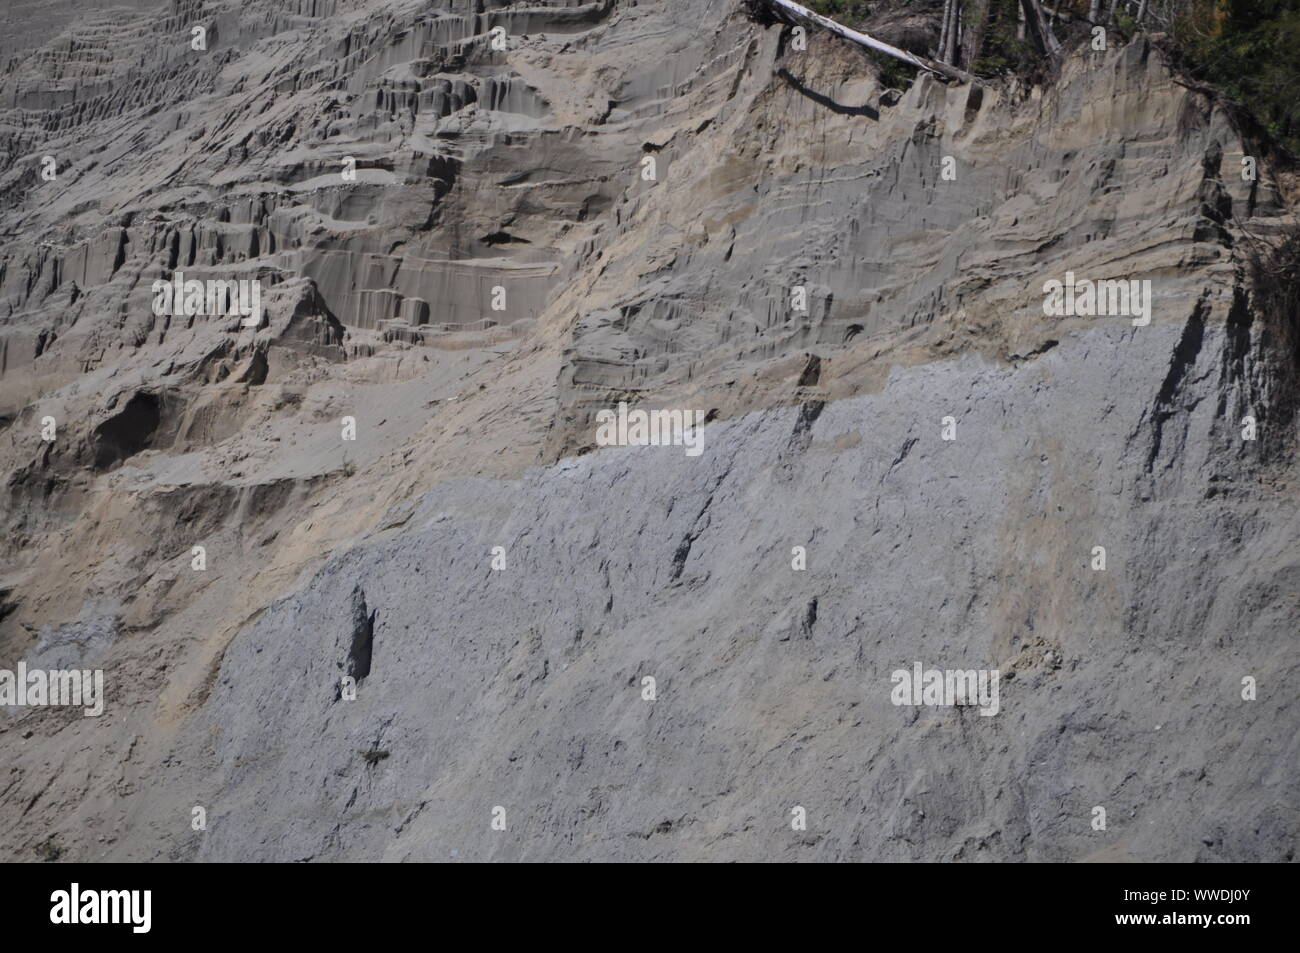 Headscarp of the fatal 2014 Oso landslide, Oso Landslide, North Fork Stillaguamish River Valley, Snohomish County, Washington, USA Stock Photo